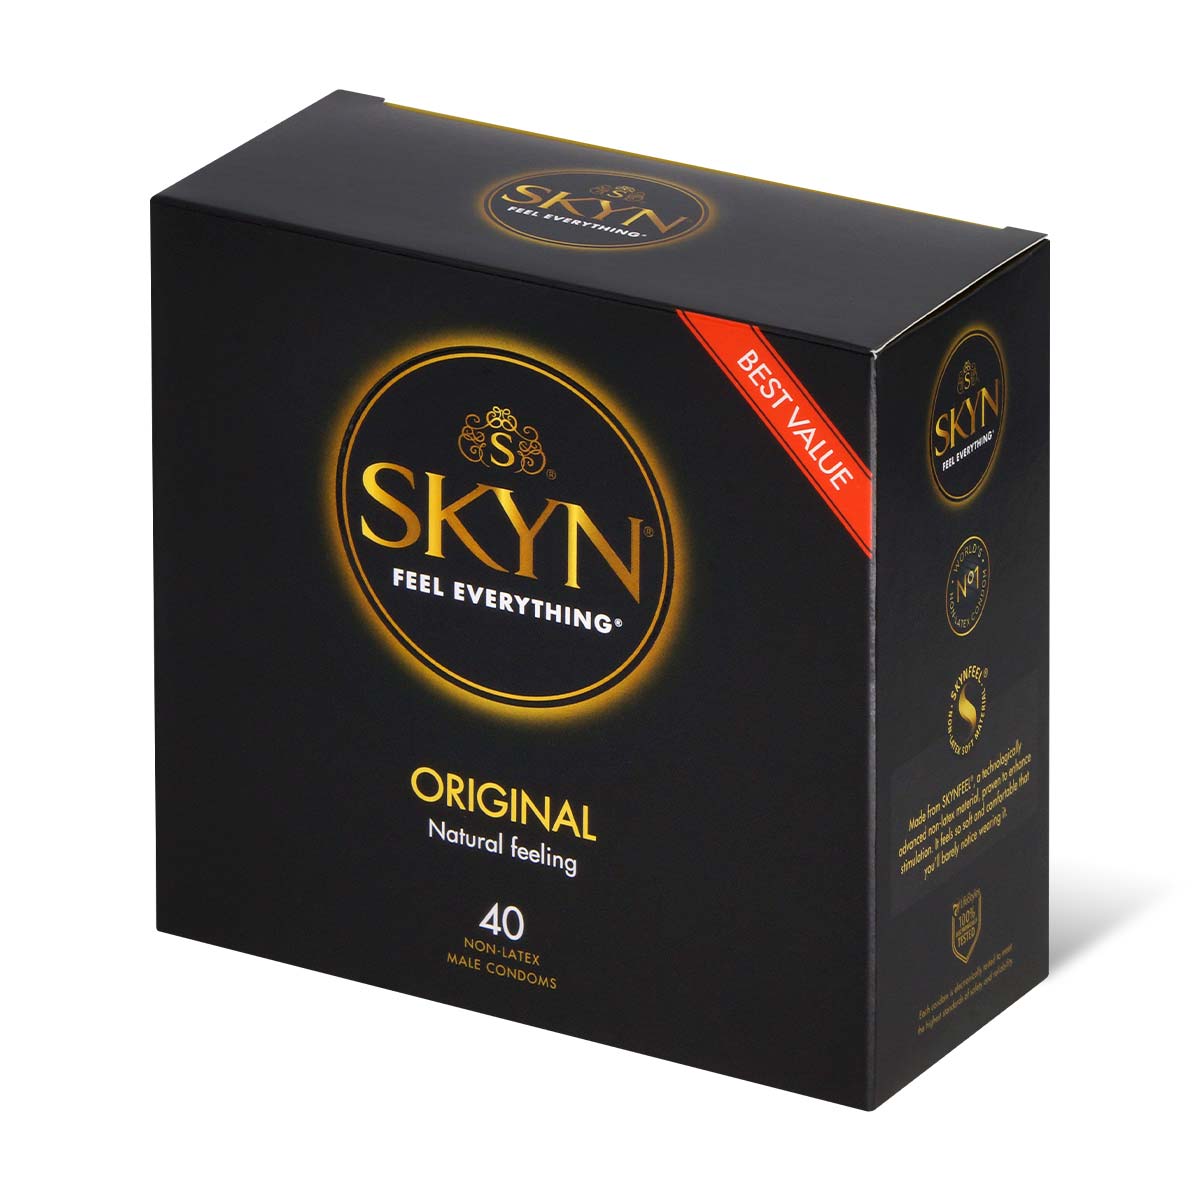 SKYN Original 40's Pack iR Condom-p_1